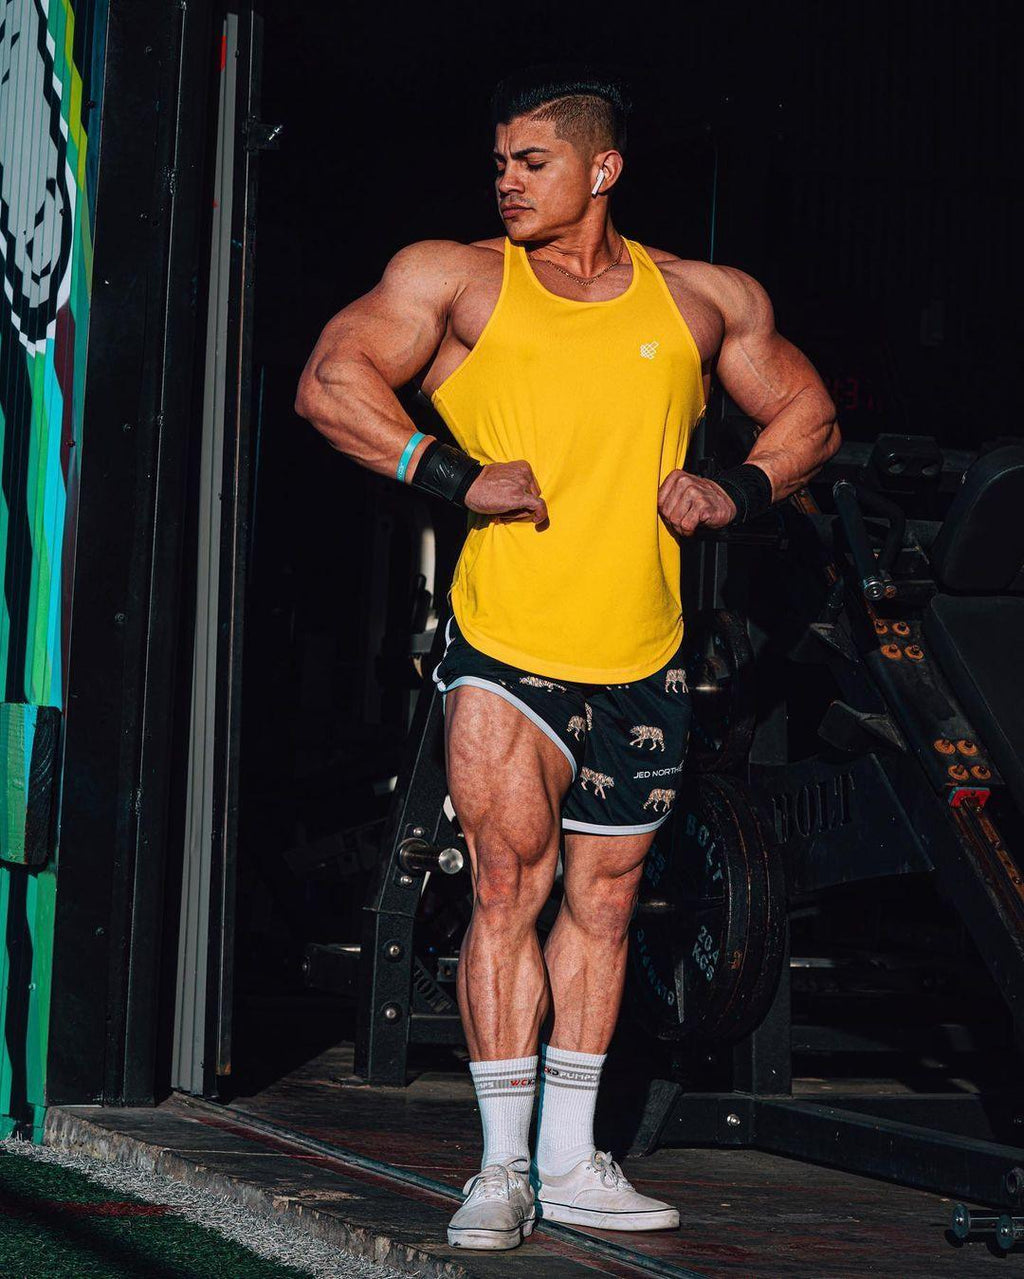 Workout Tank Tops for Men, Bodybuilding & Fitness Gym Wear